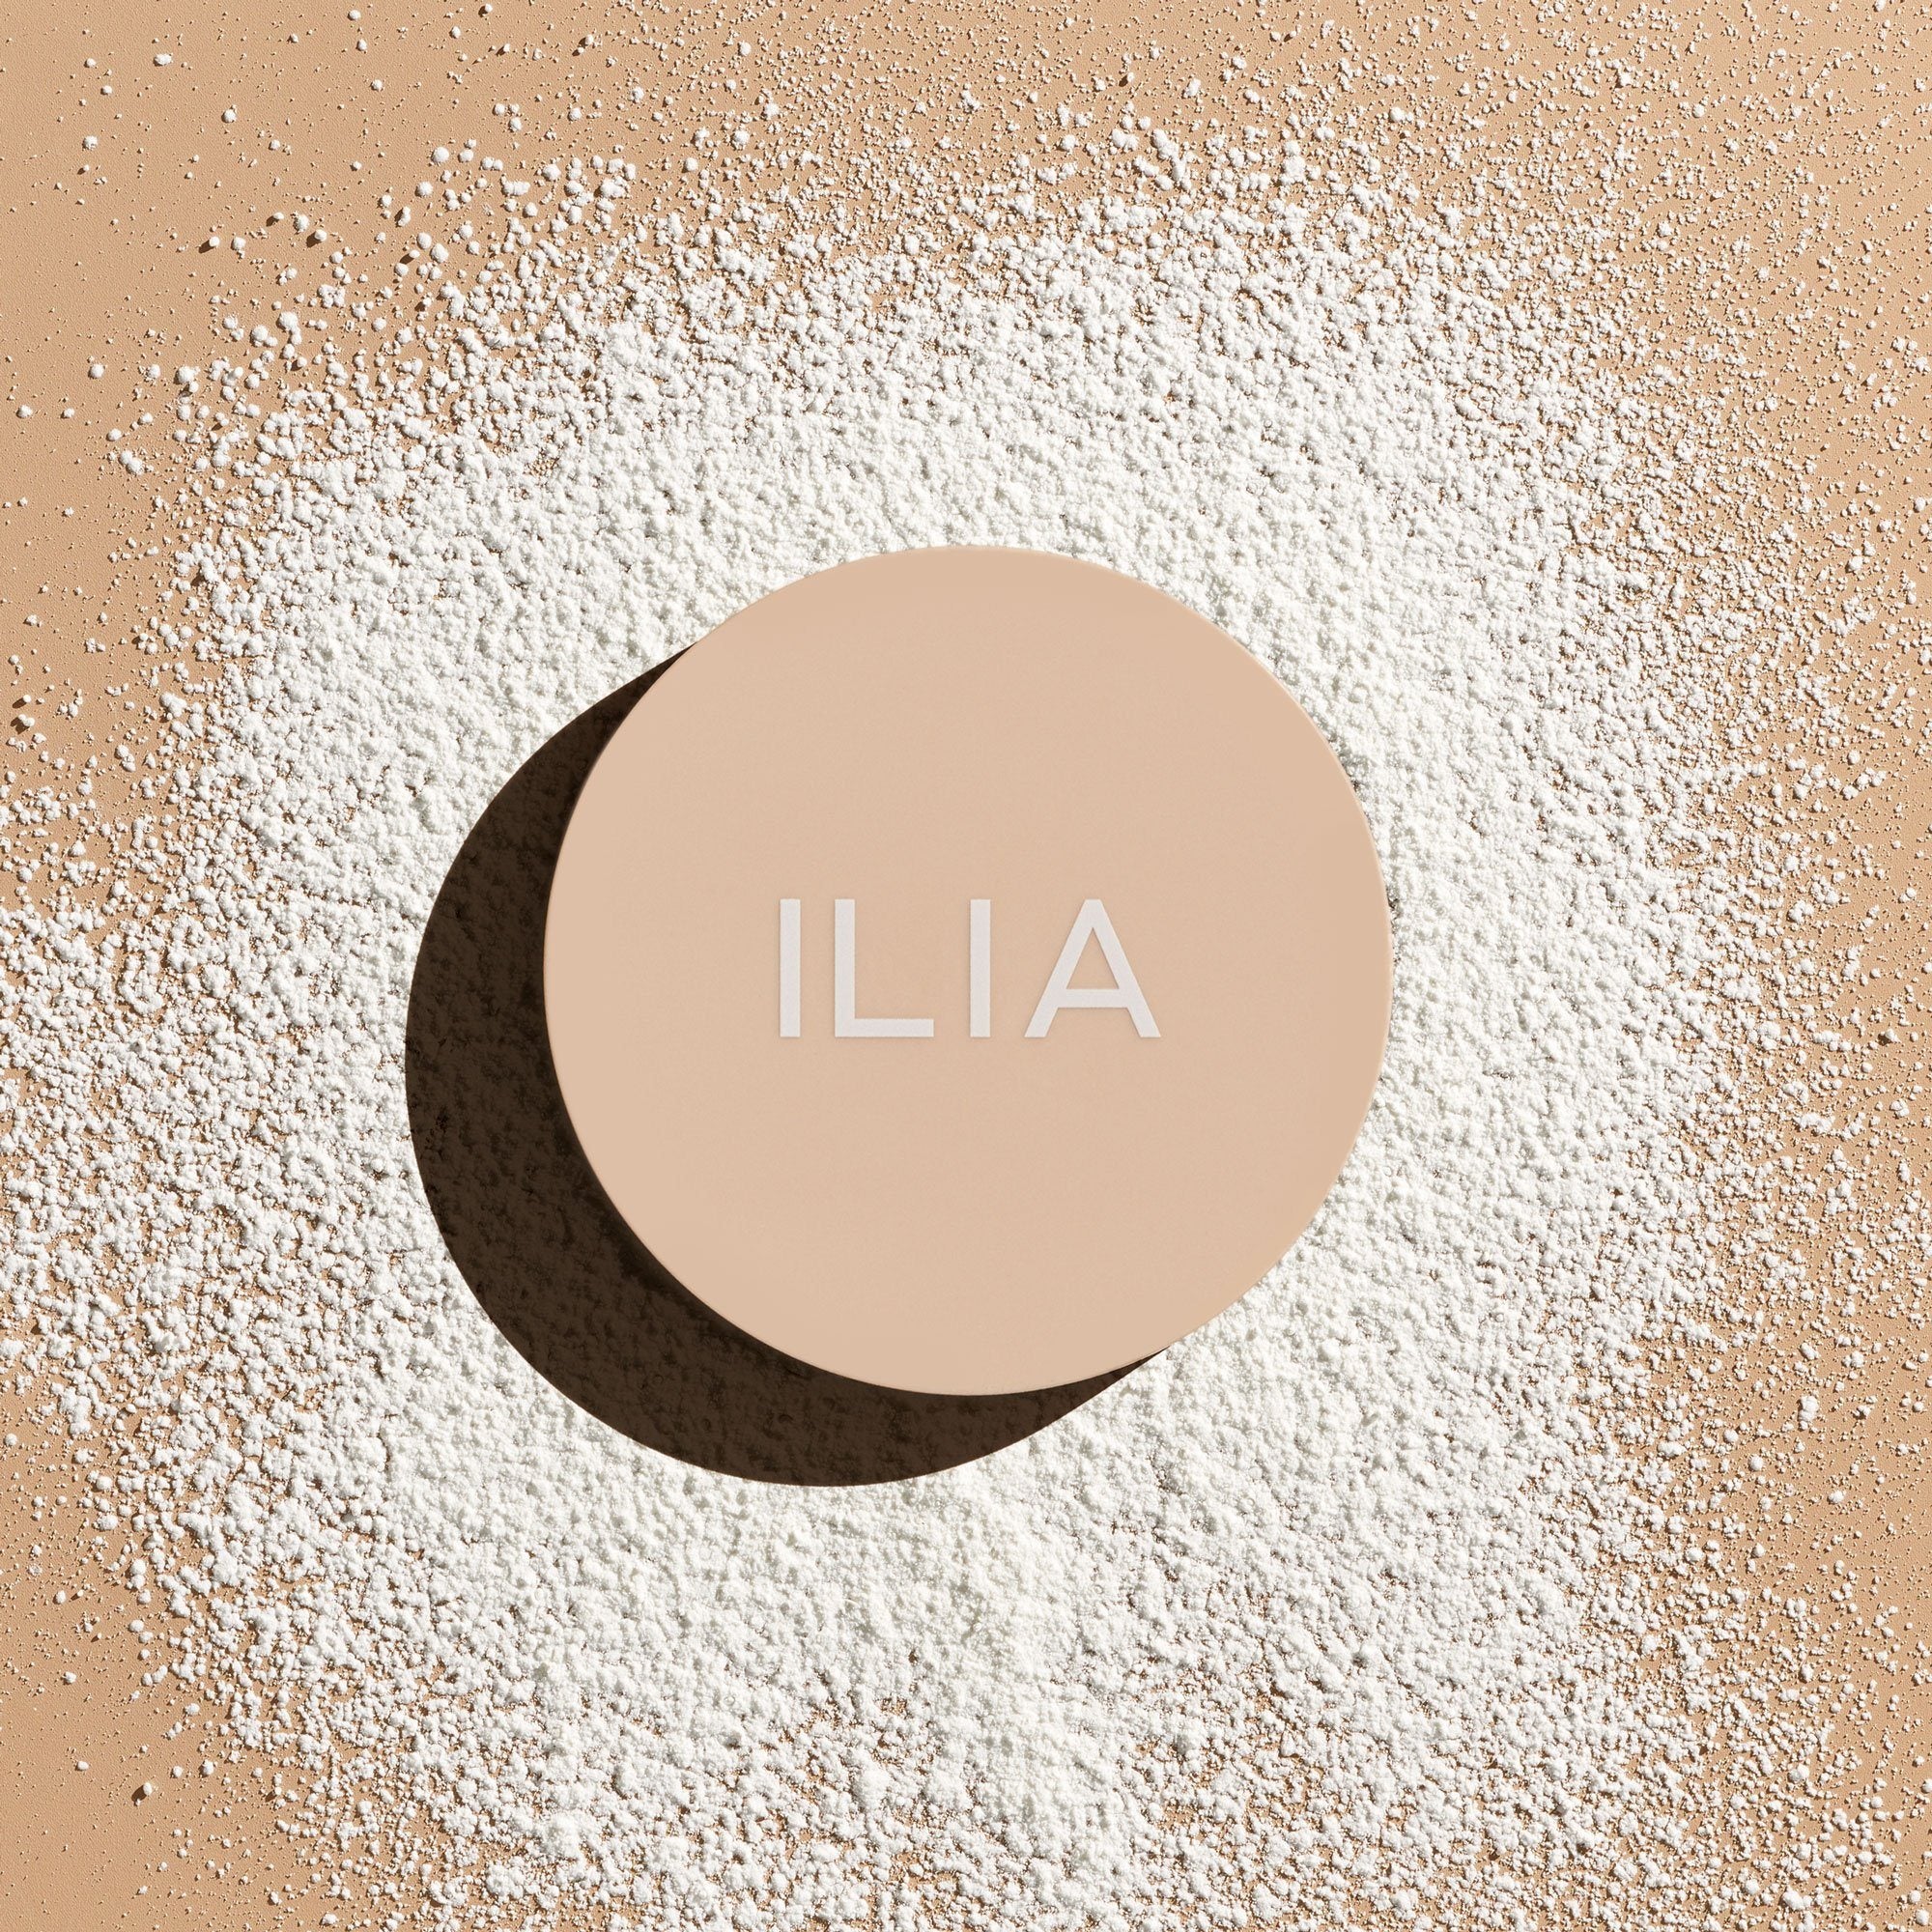 Ilia Beauty Soft Focus Finishing Powder  Fade Into You .32oz